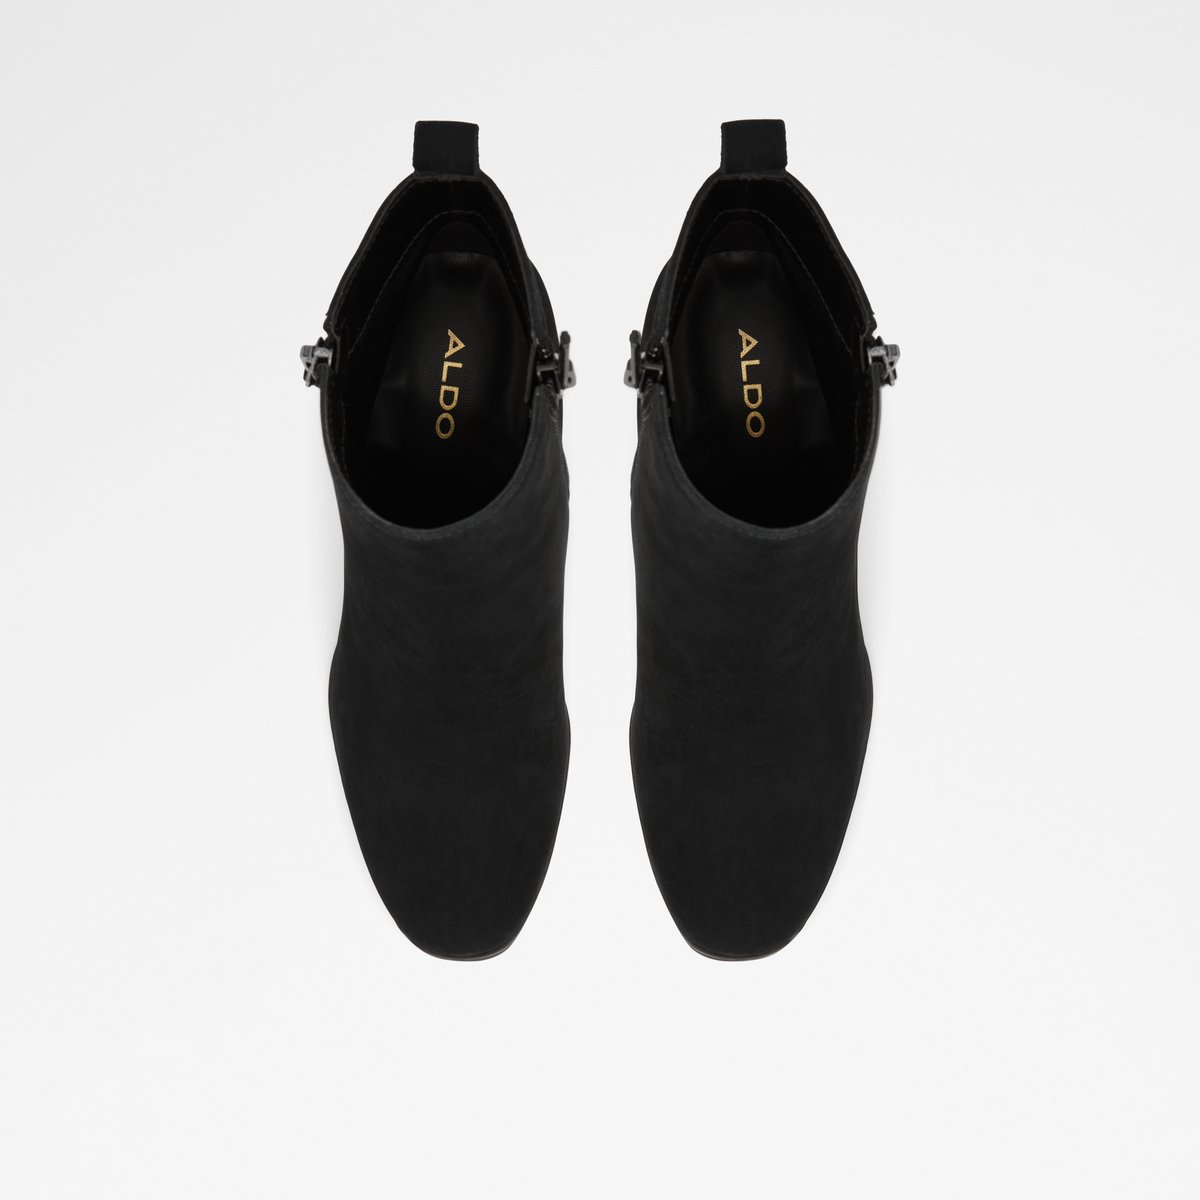 Noemieflex Black Leather Nubuck Women's Casual boots | ALDO Canada